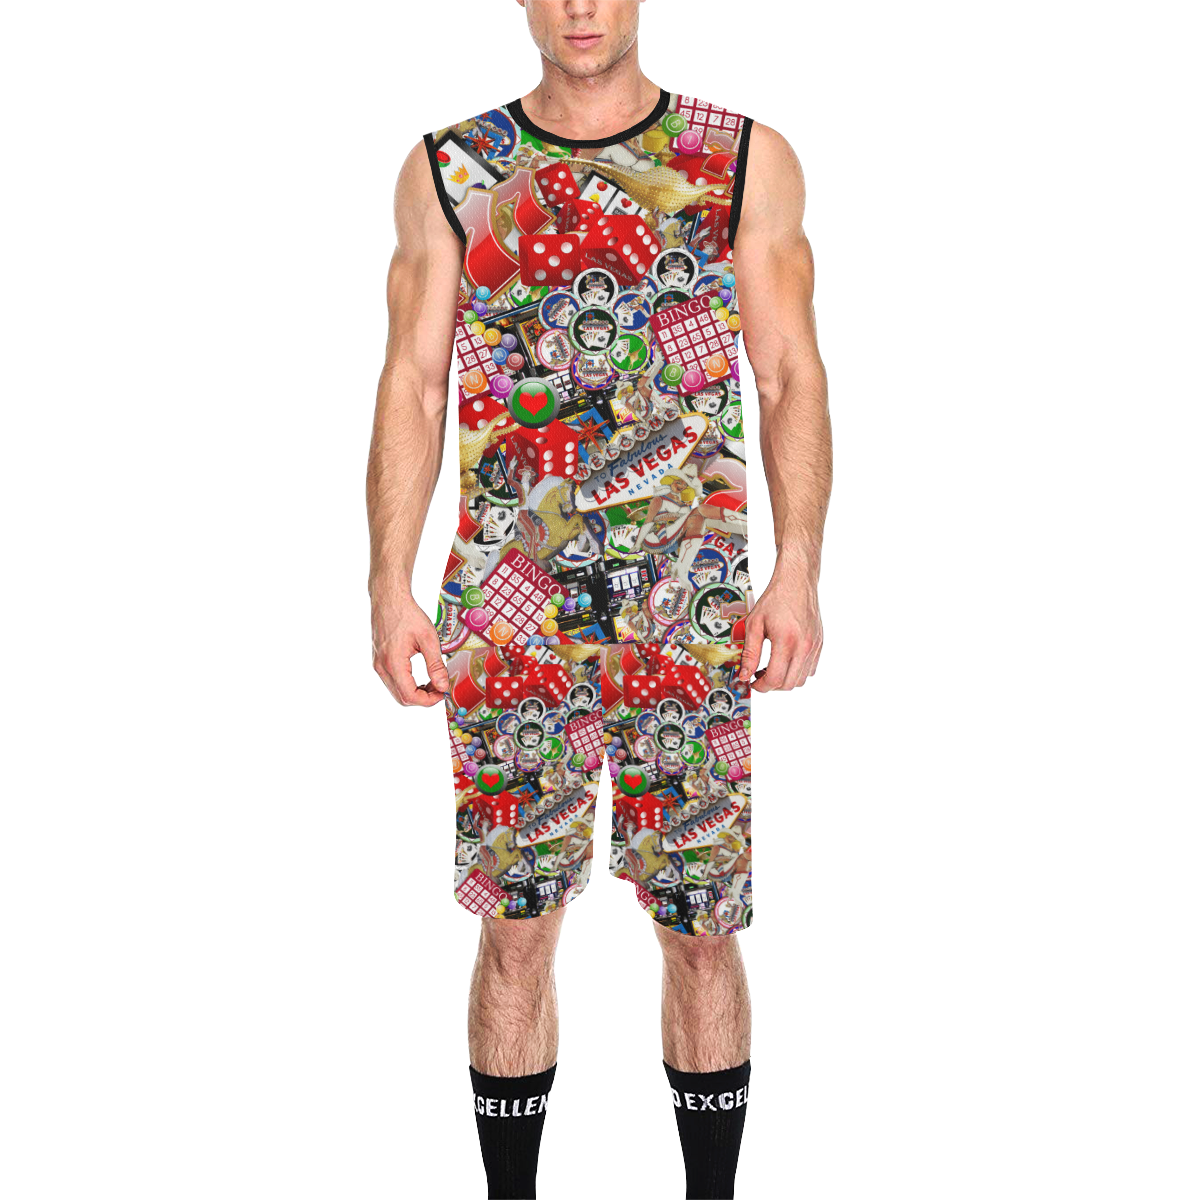 Gamblers Delight - Las Vegas Icons All Over Print Basketball Uniform